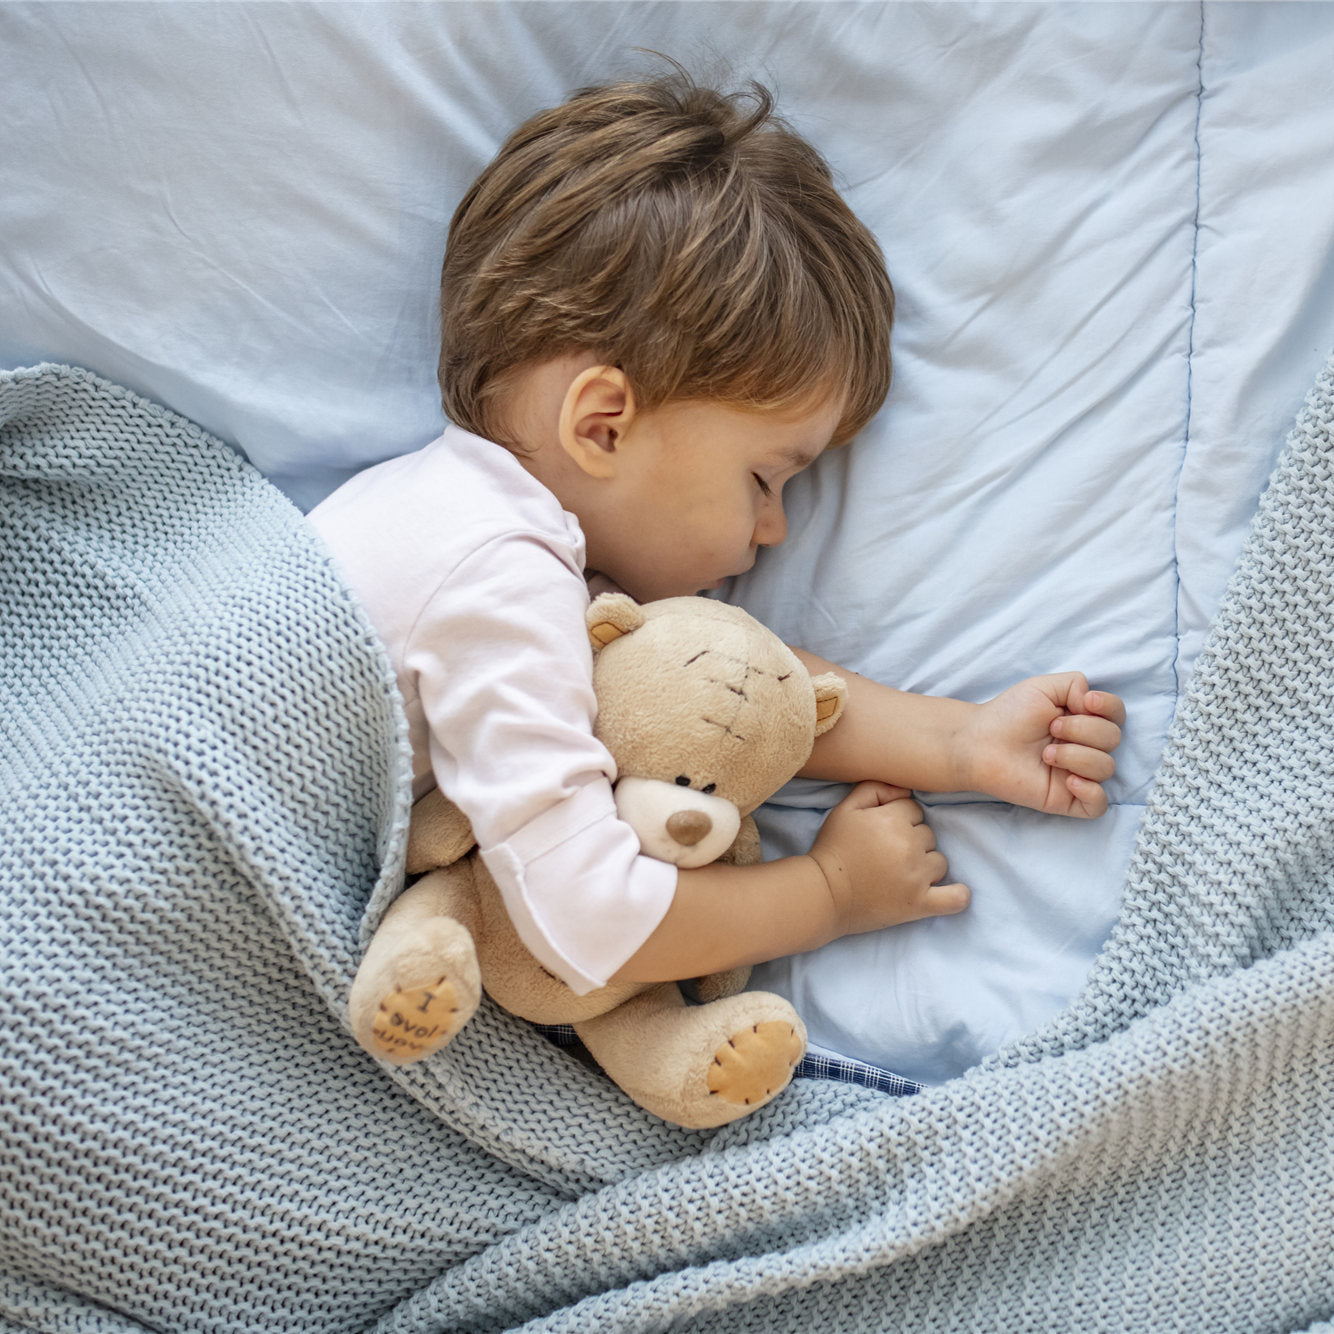 Boy sleeping on bed with teddy bear